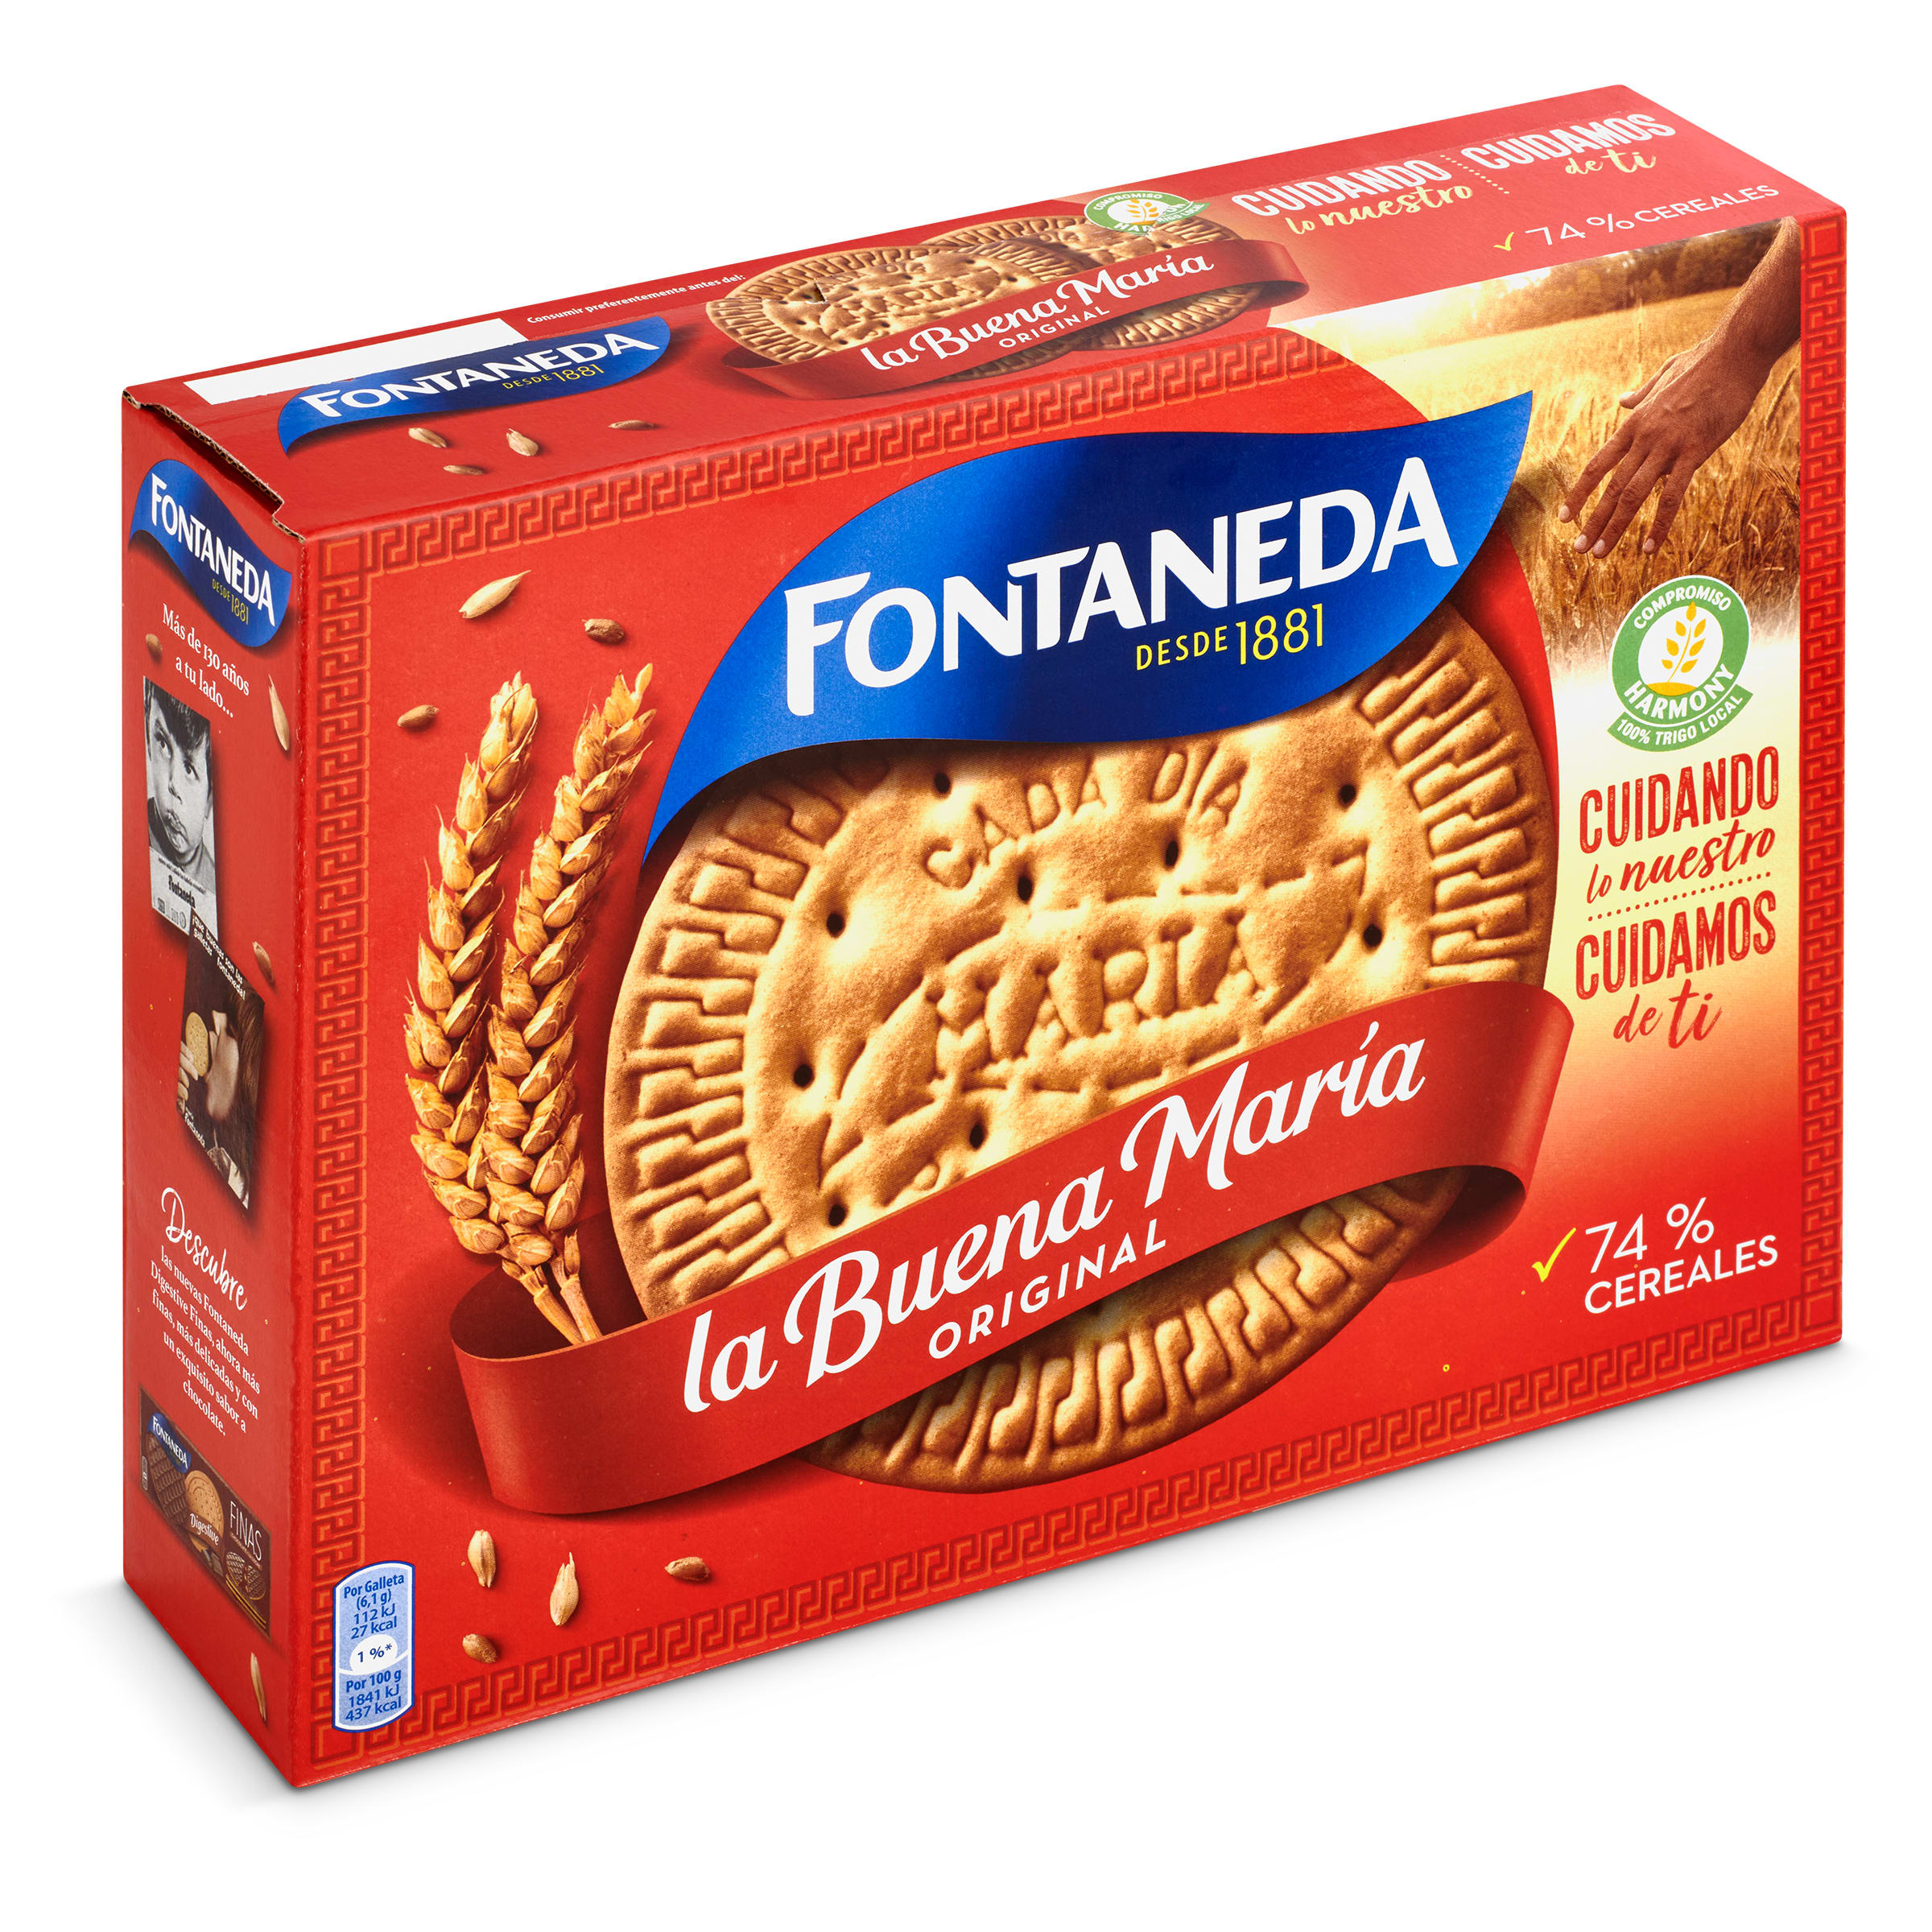 Comprar galletas fontaneda - Supermercados DIA